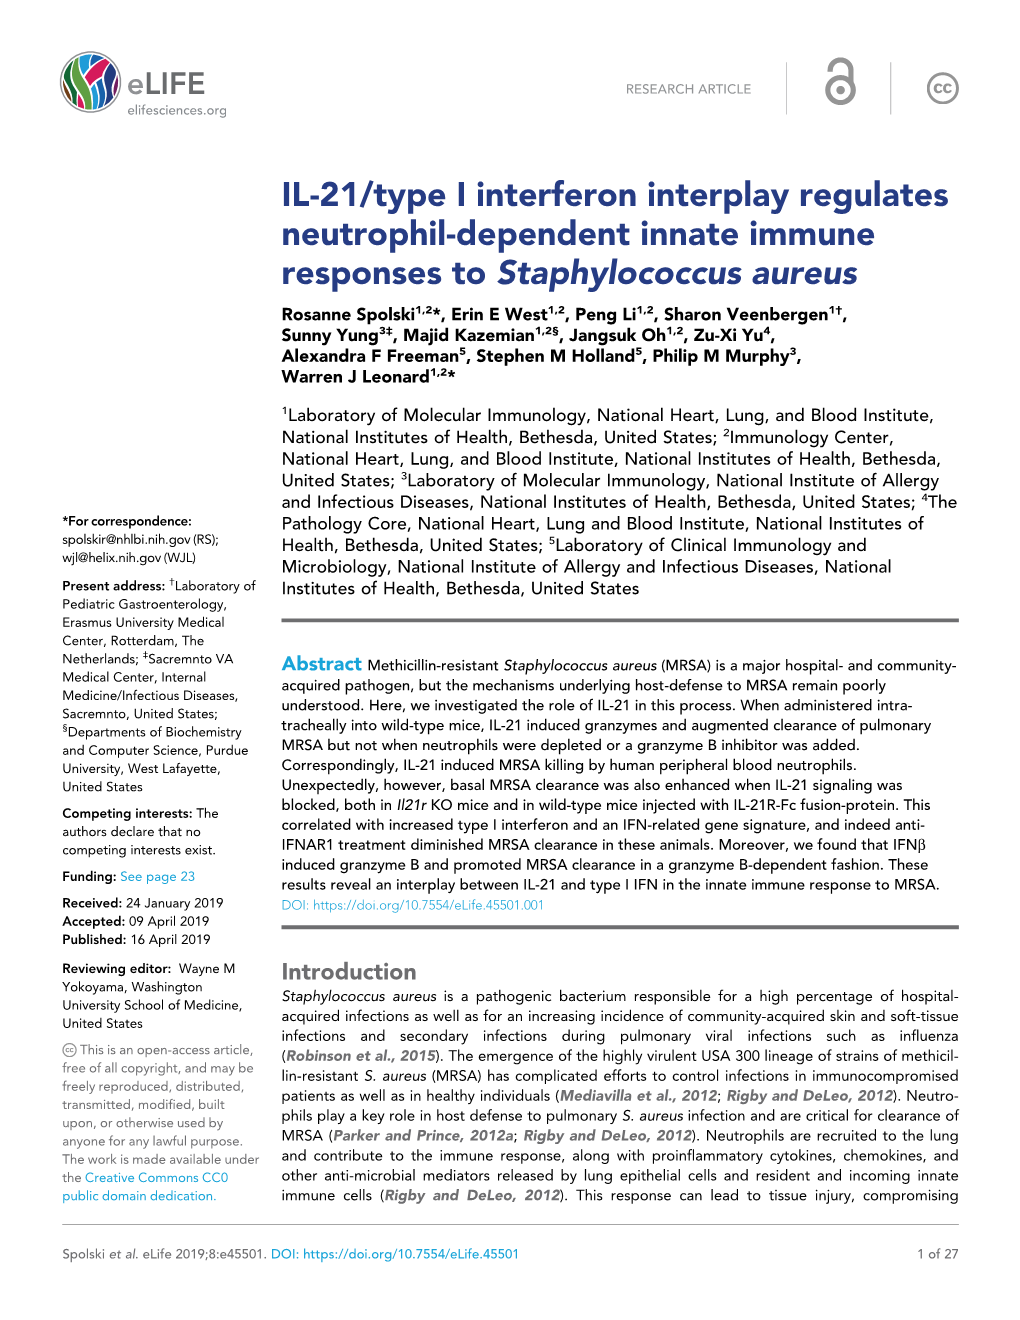 IL-21/Type I Interferon Interplay Regulates Neutrophil-Dependent